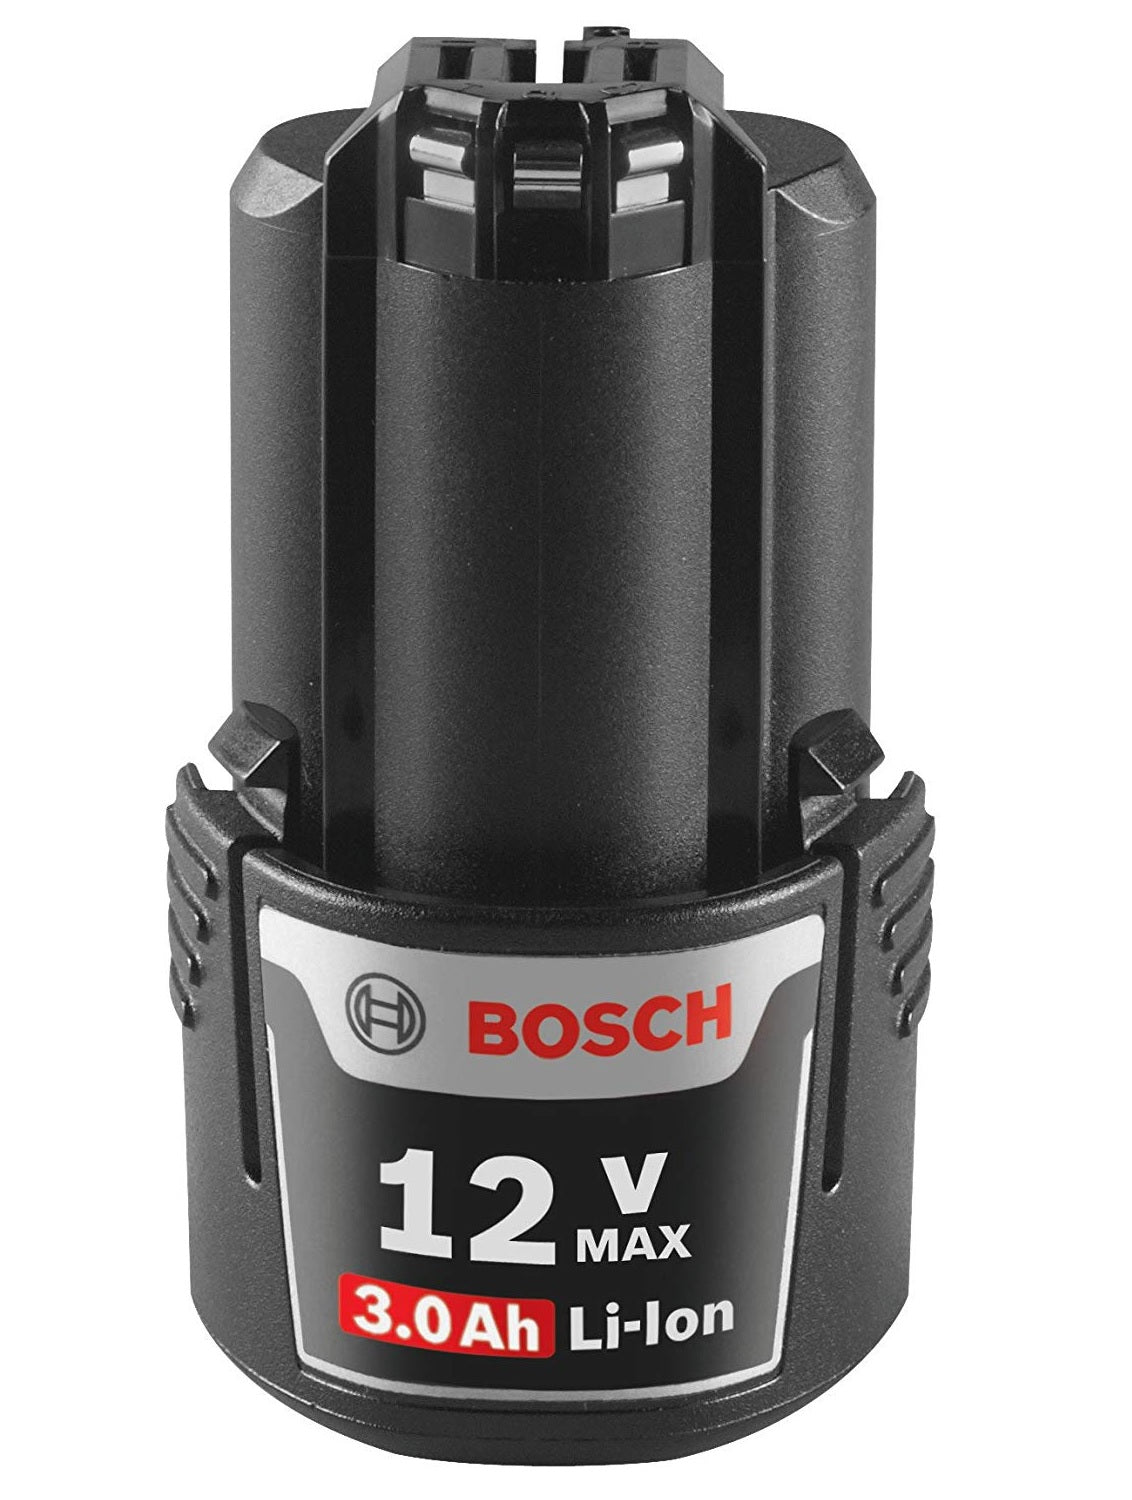 Bosch GBA12V30 Lithium-Ion 3.0 Ah Battery, 12V Max